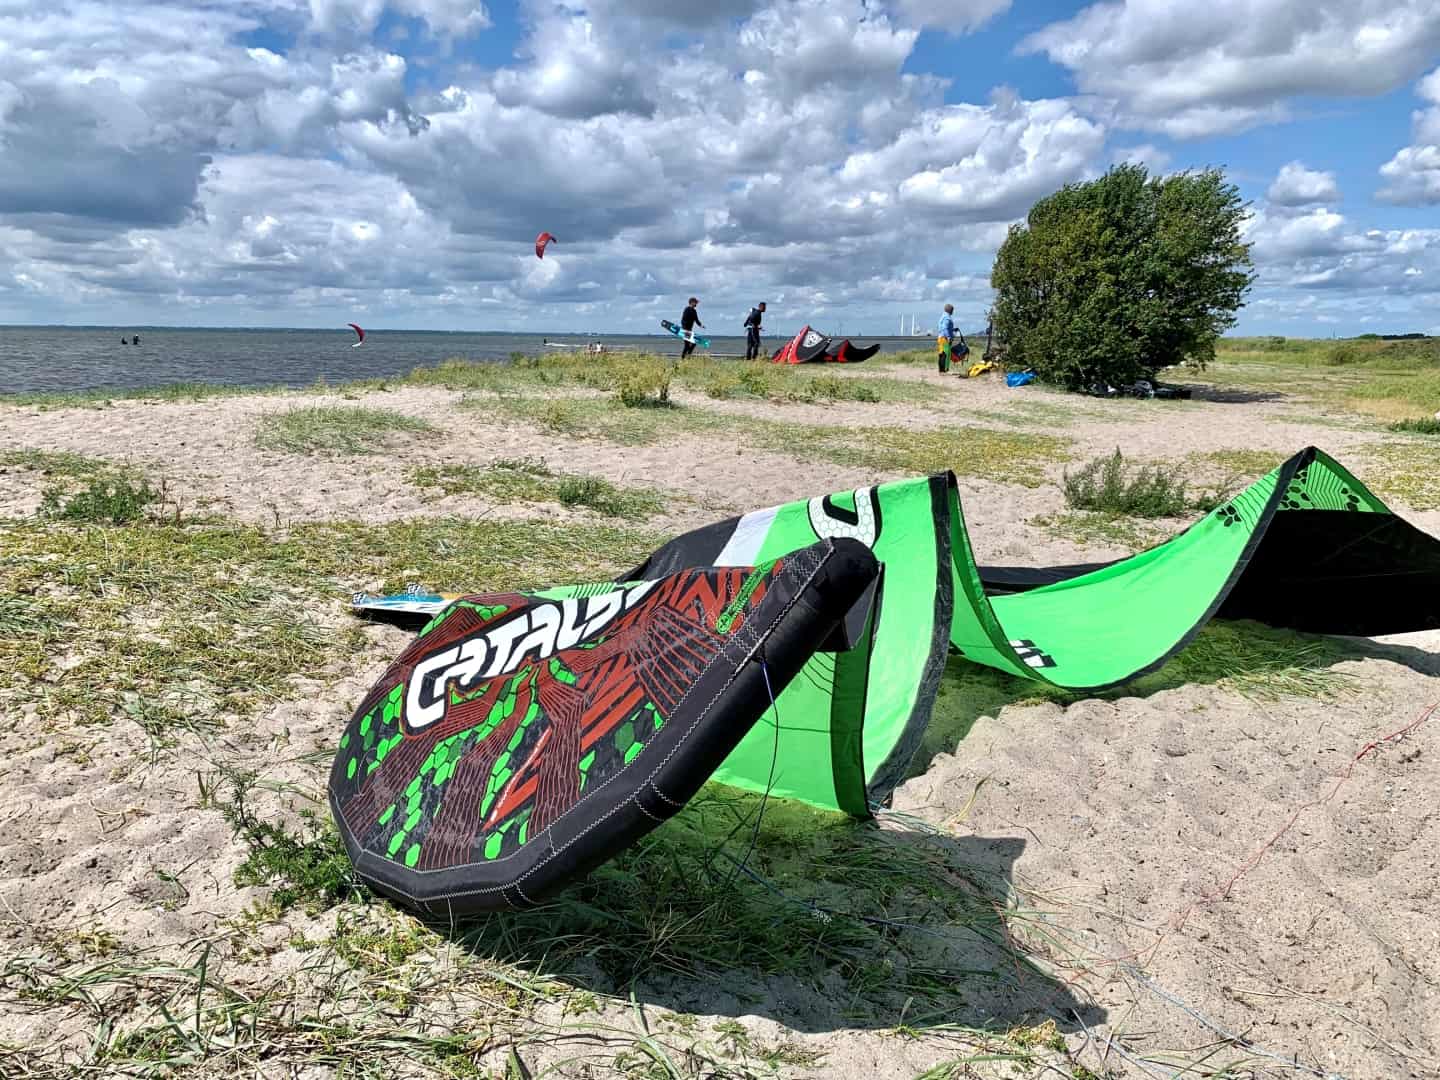 Kiter på vej på vandet